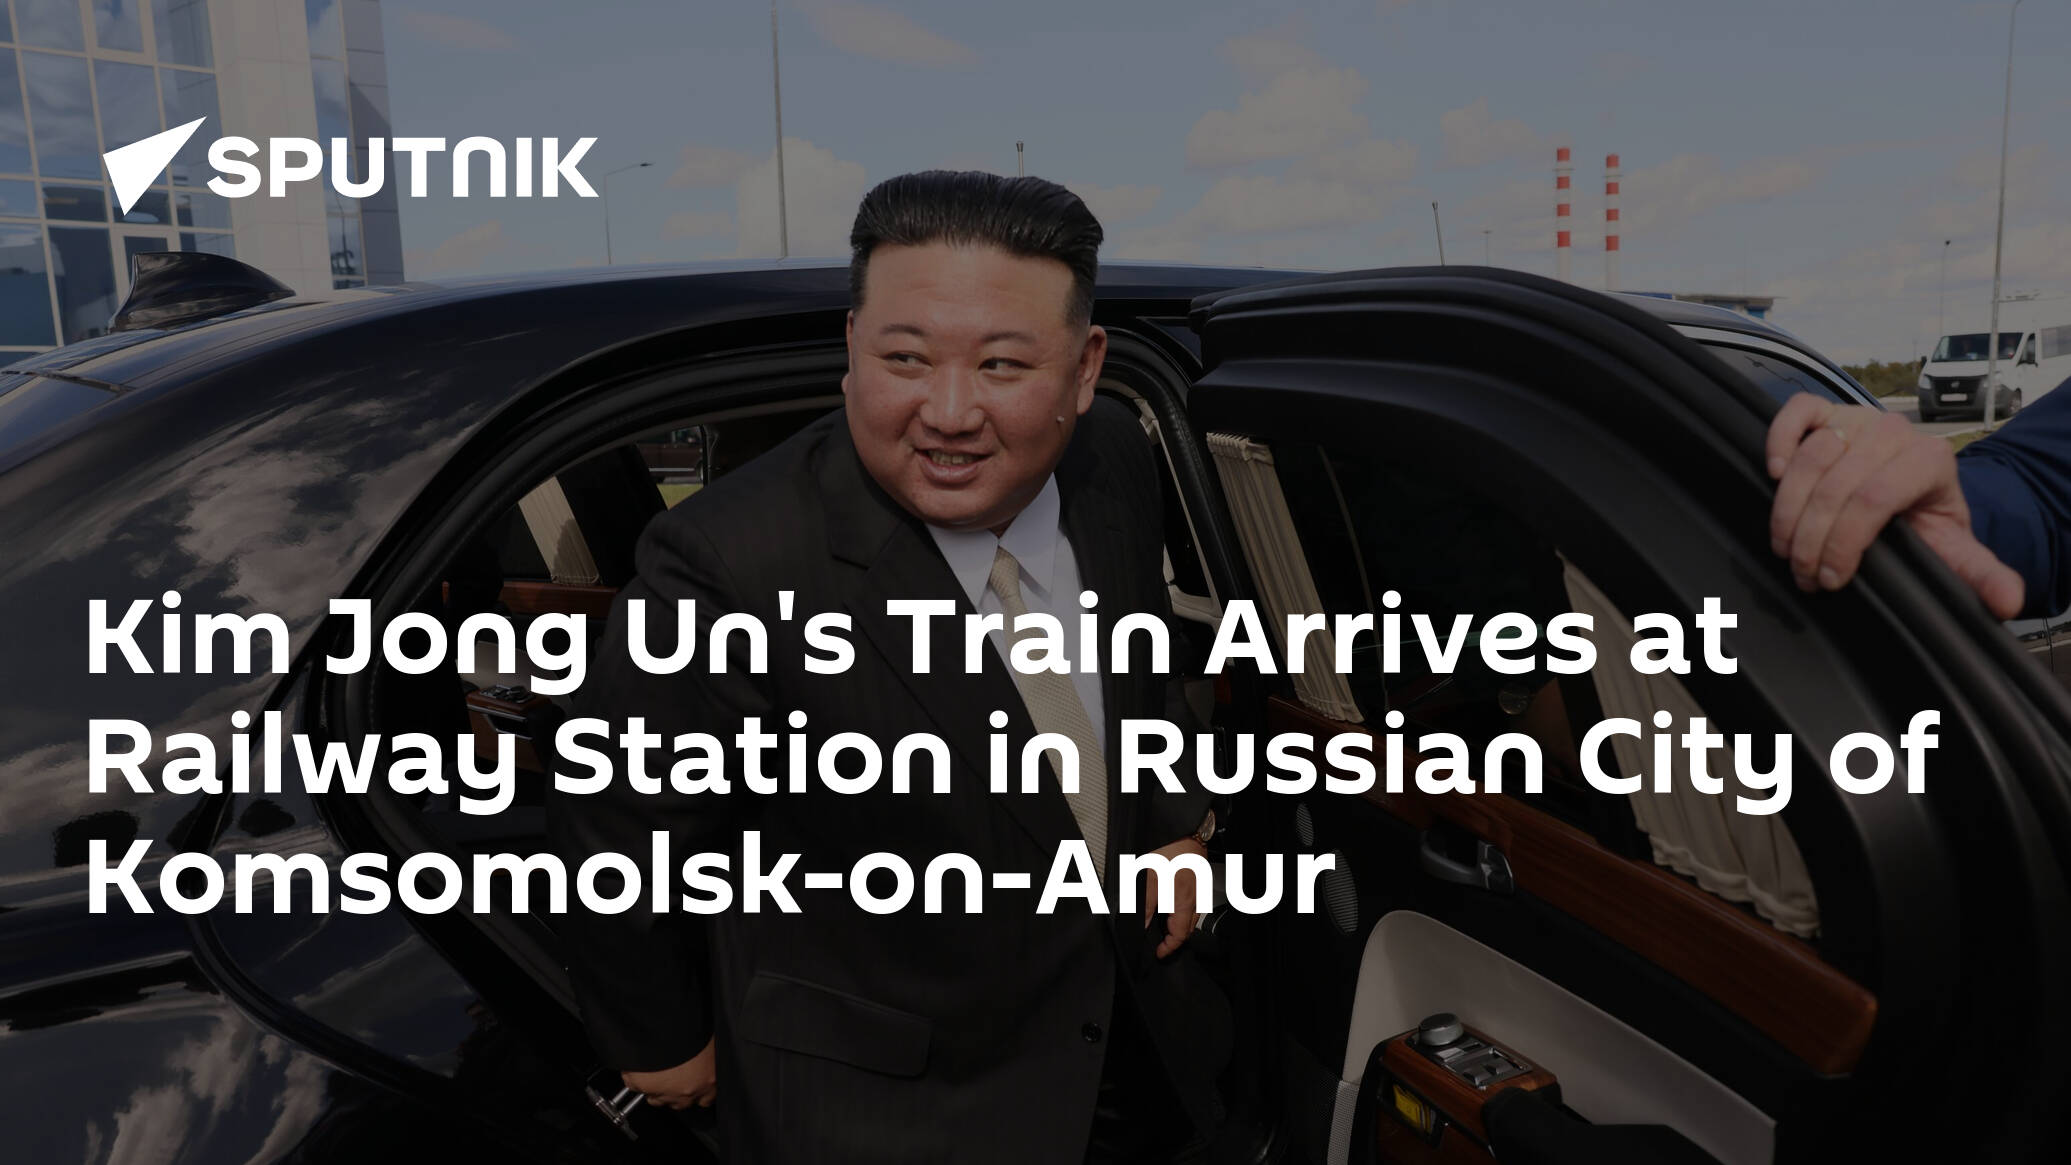 Kim Jong Un's Train Arrives at Railway Station in Russian City of Komsomolsk-on-Amur